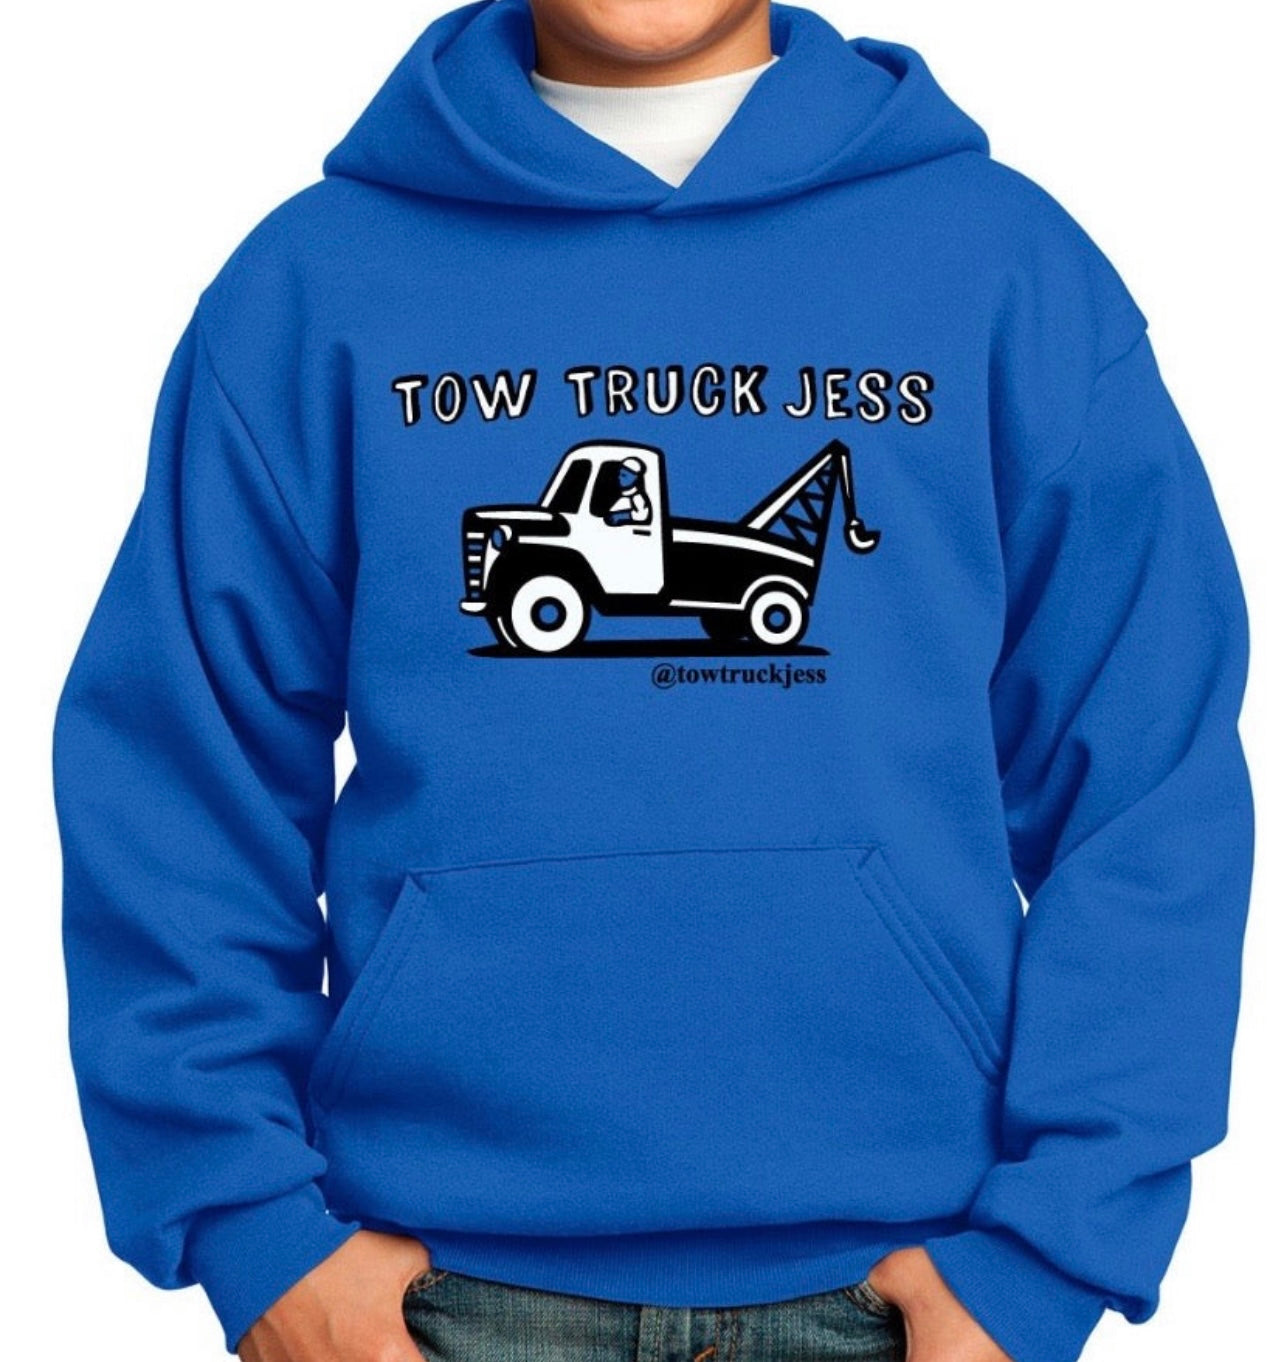 A Free T-shirt and Bracelet with Kids Youth Blue Tow Truck Jess Sweatshirt w/Wrecker Logo